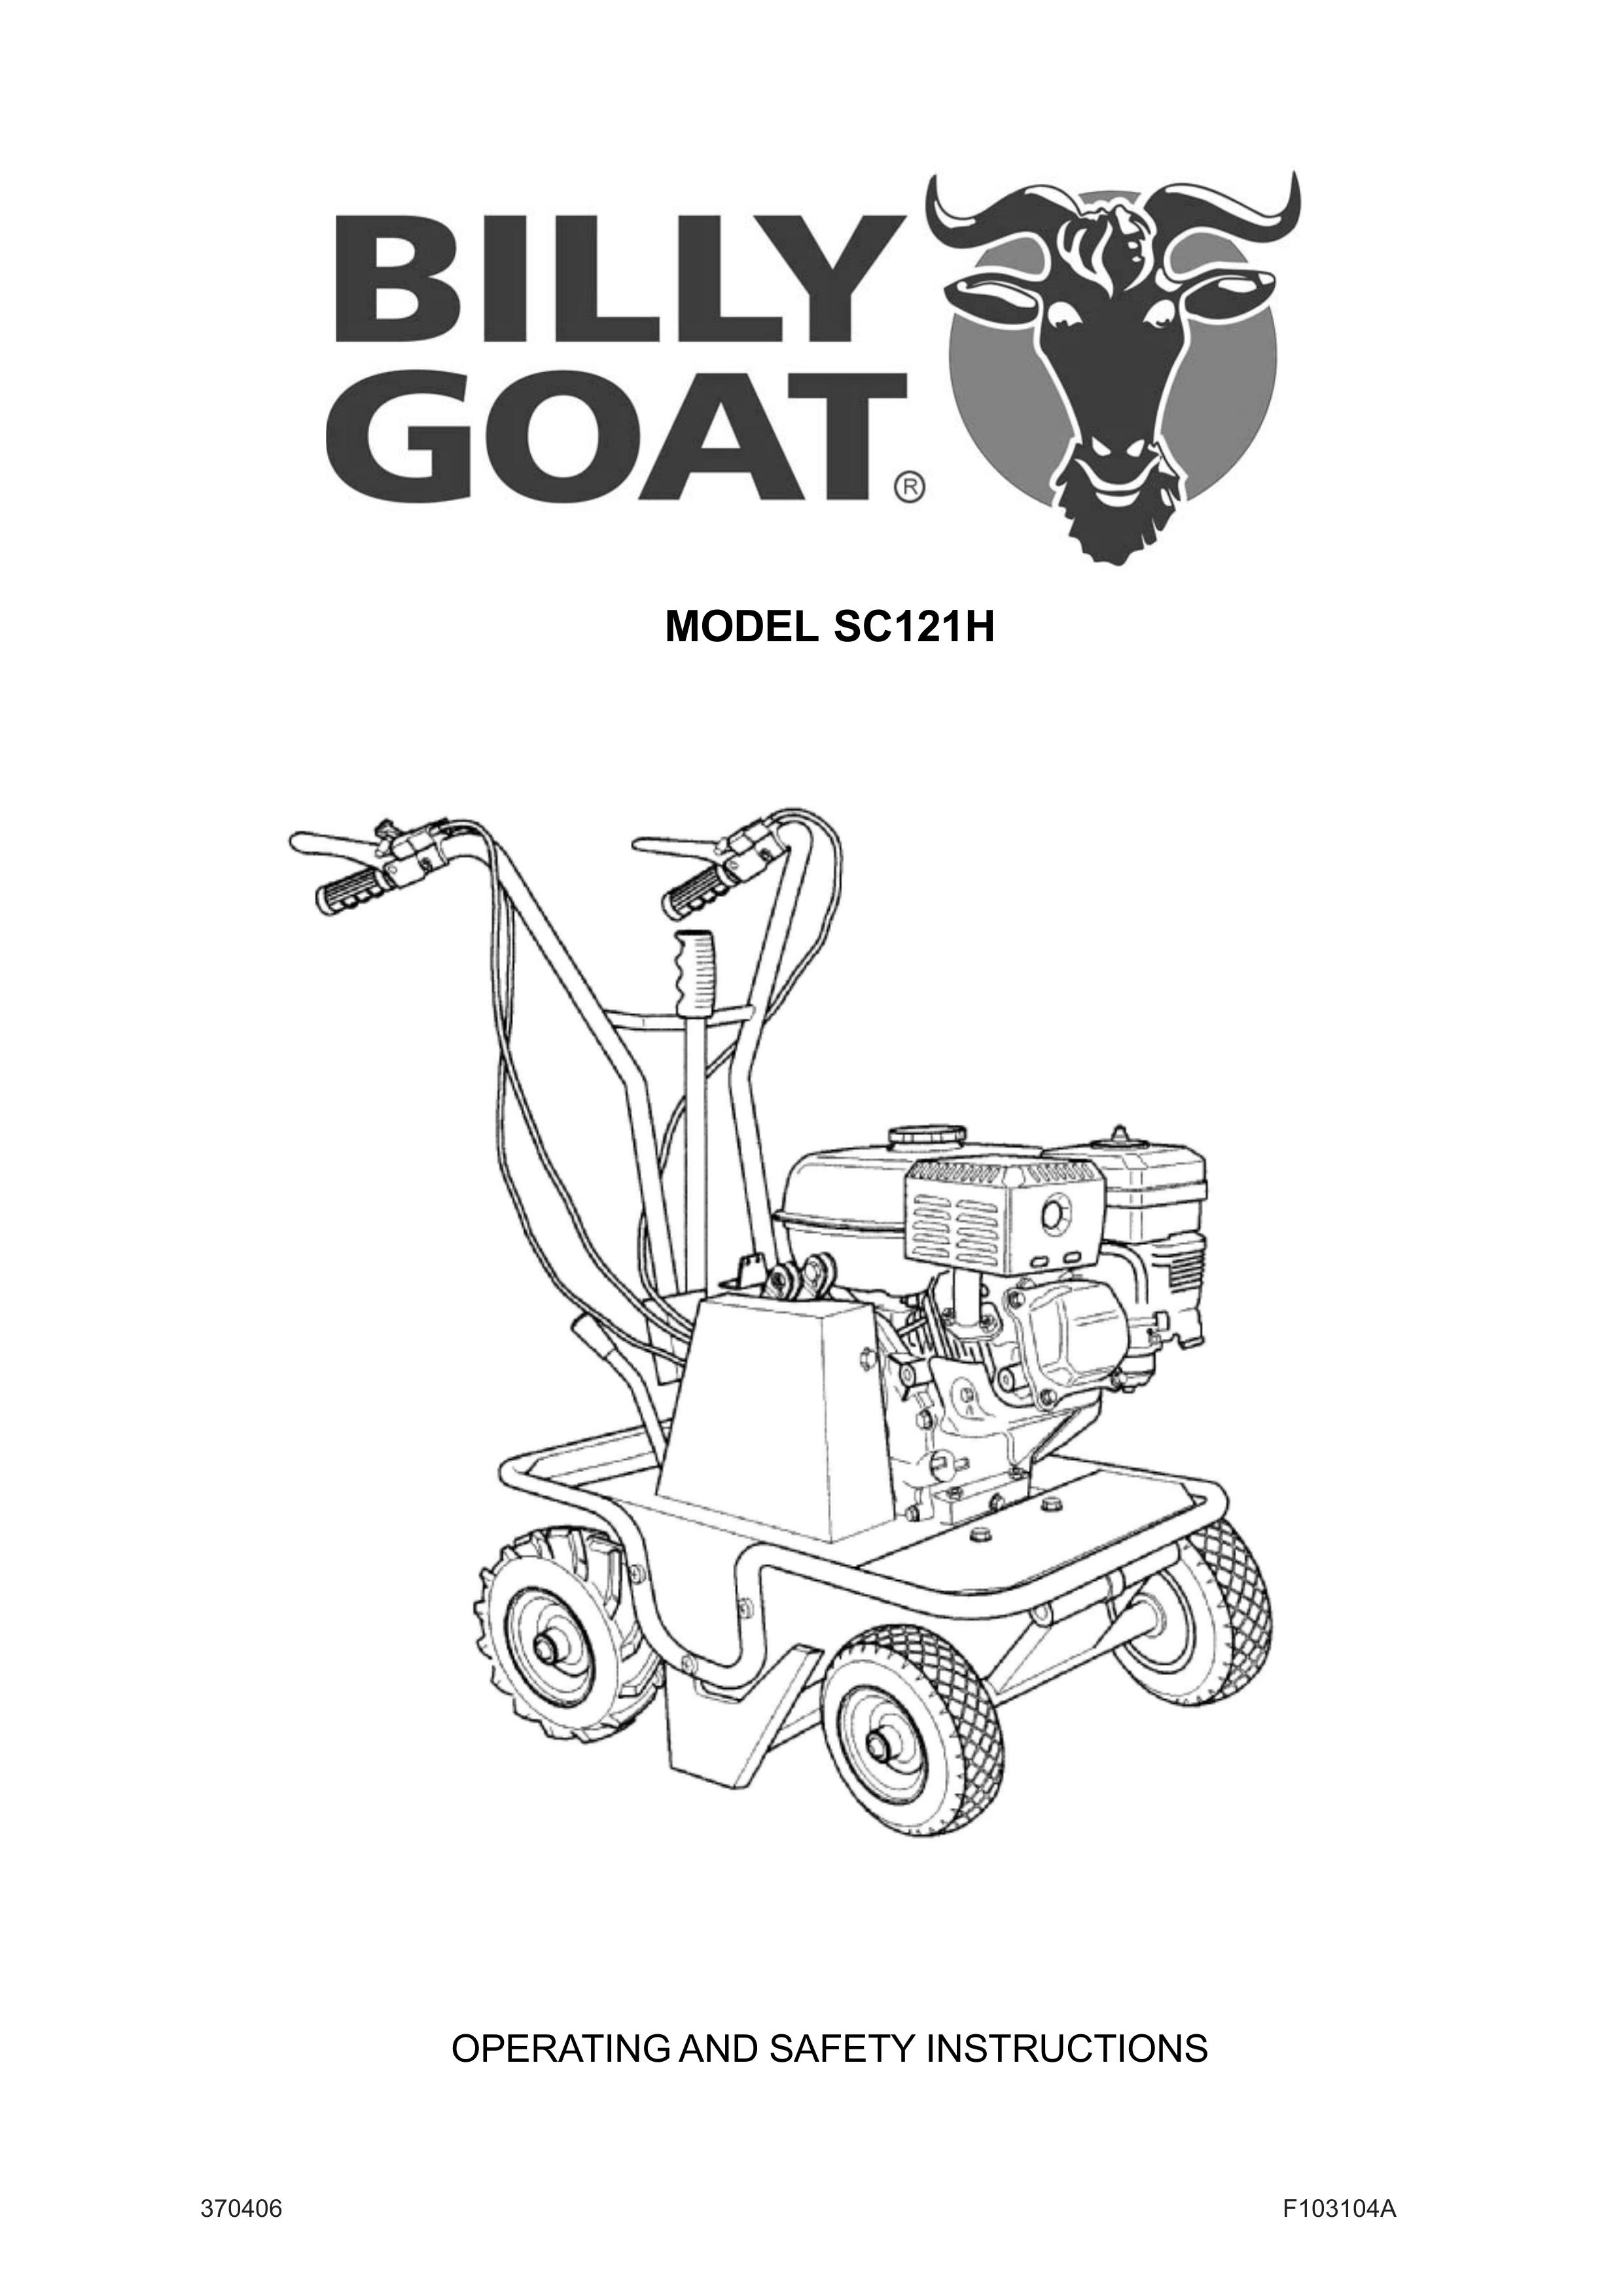 Billy Goat SC121H Lawn Mower User Manual